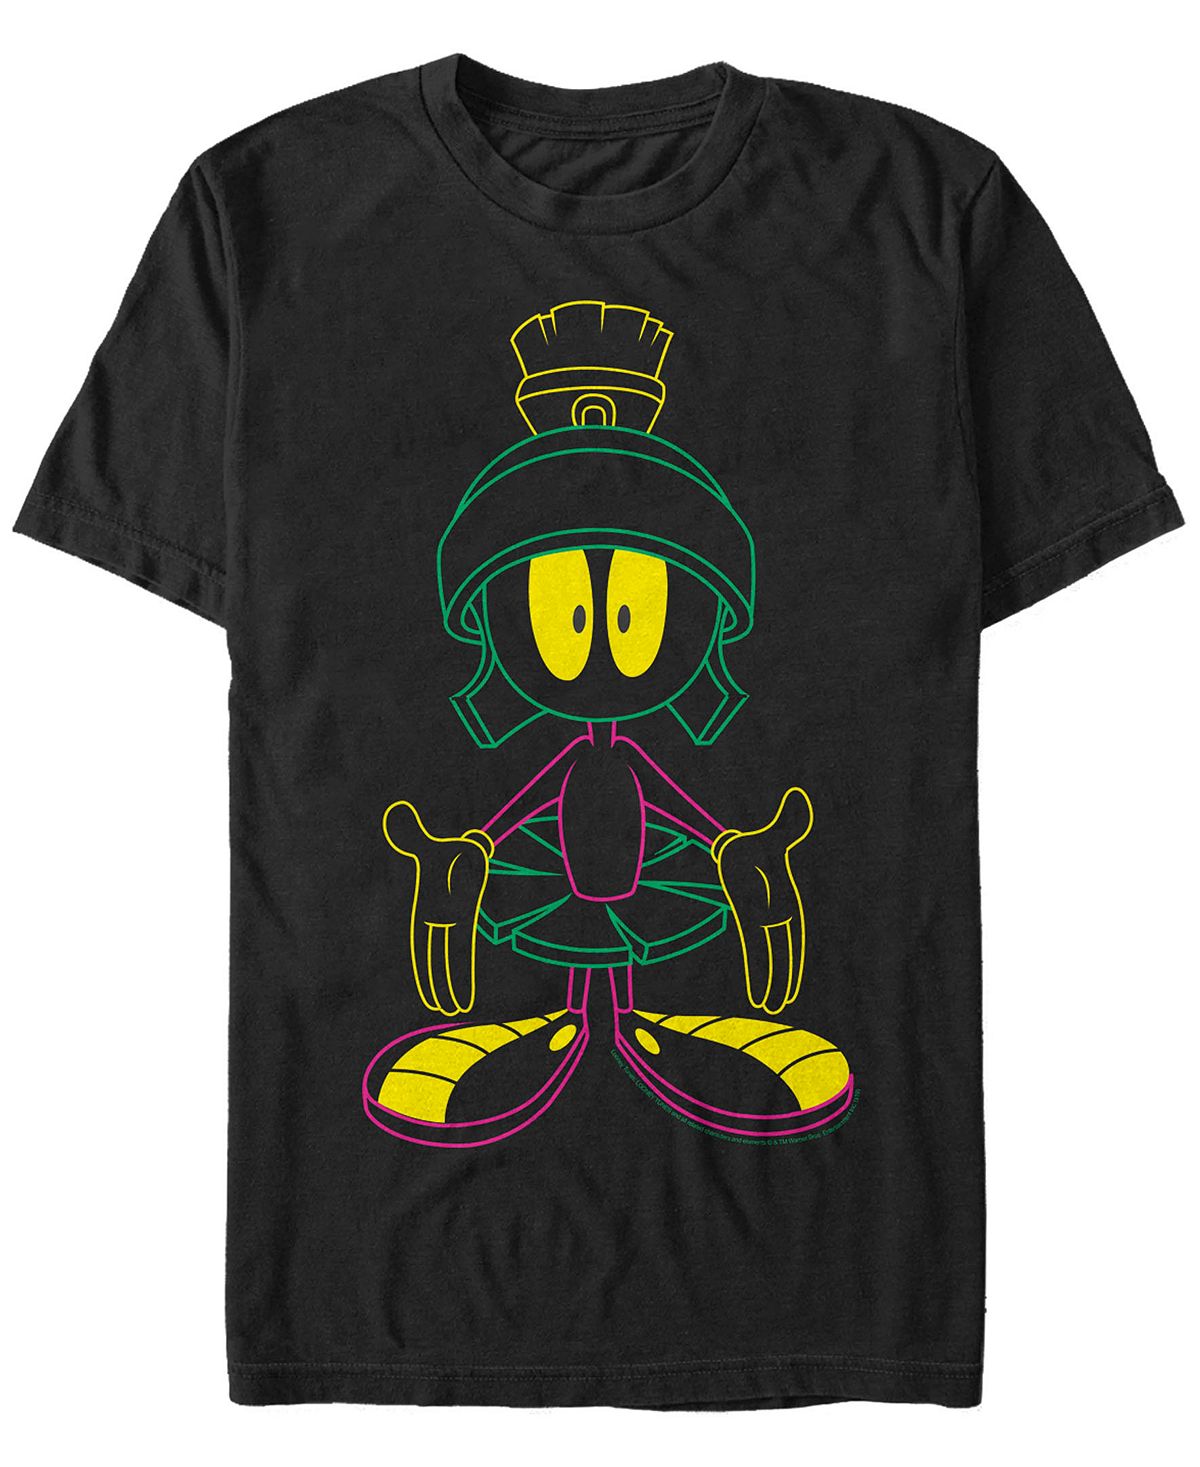 Мужская футболка с коротким рукавом neon marvin the martian looney tunes Fifth Sun, черный